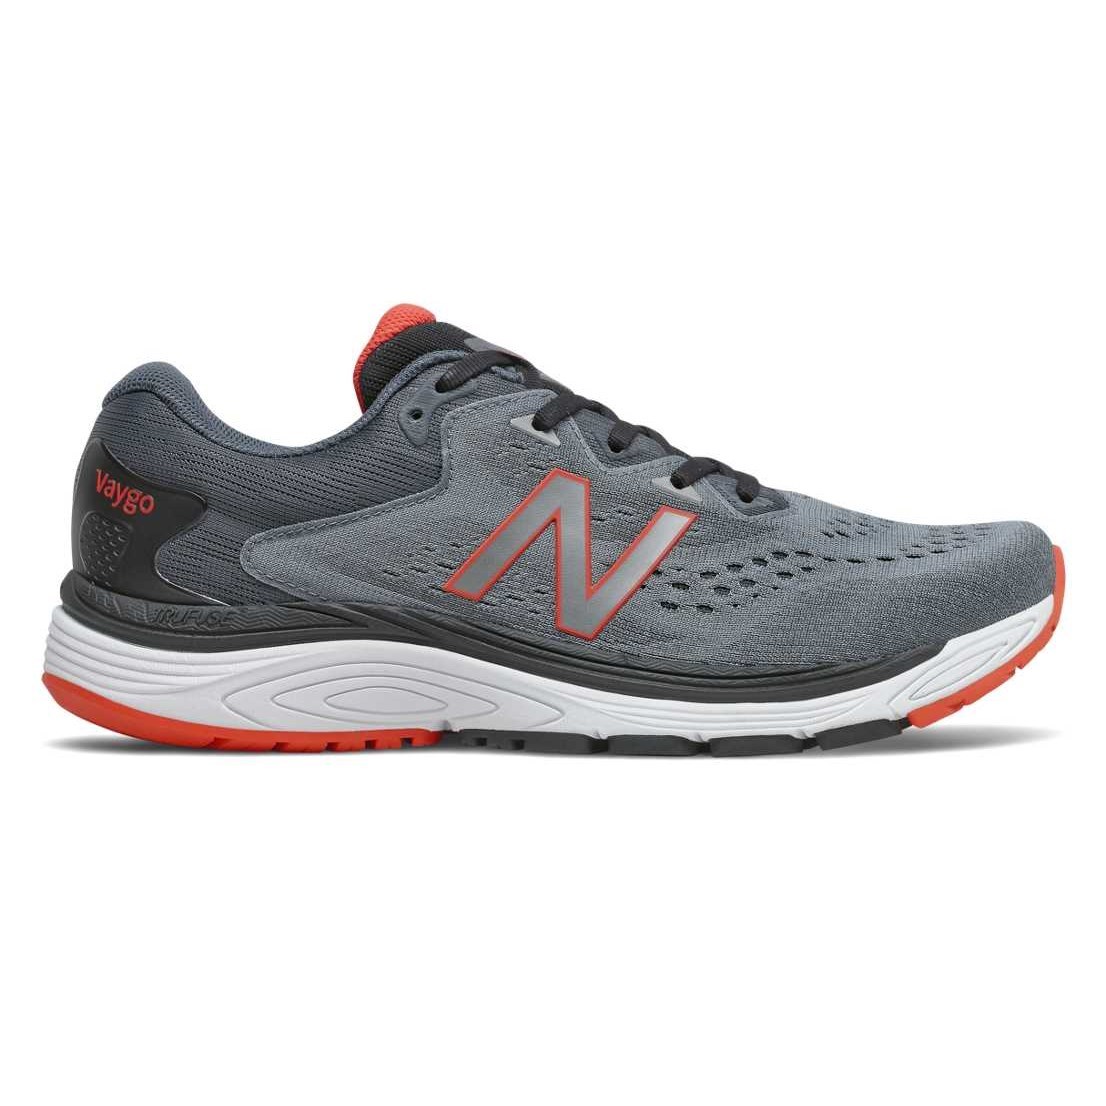 New Balance Vaygo - Mens Running Shoes - Grey/Black/Red | Sportitude